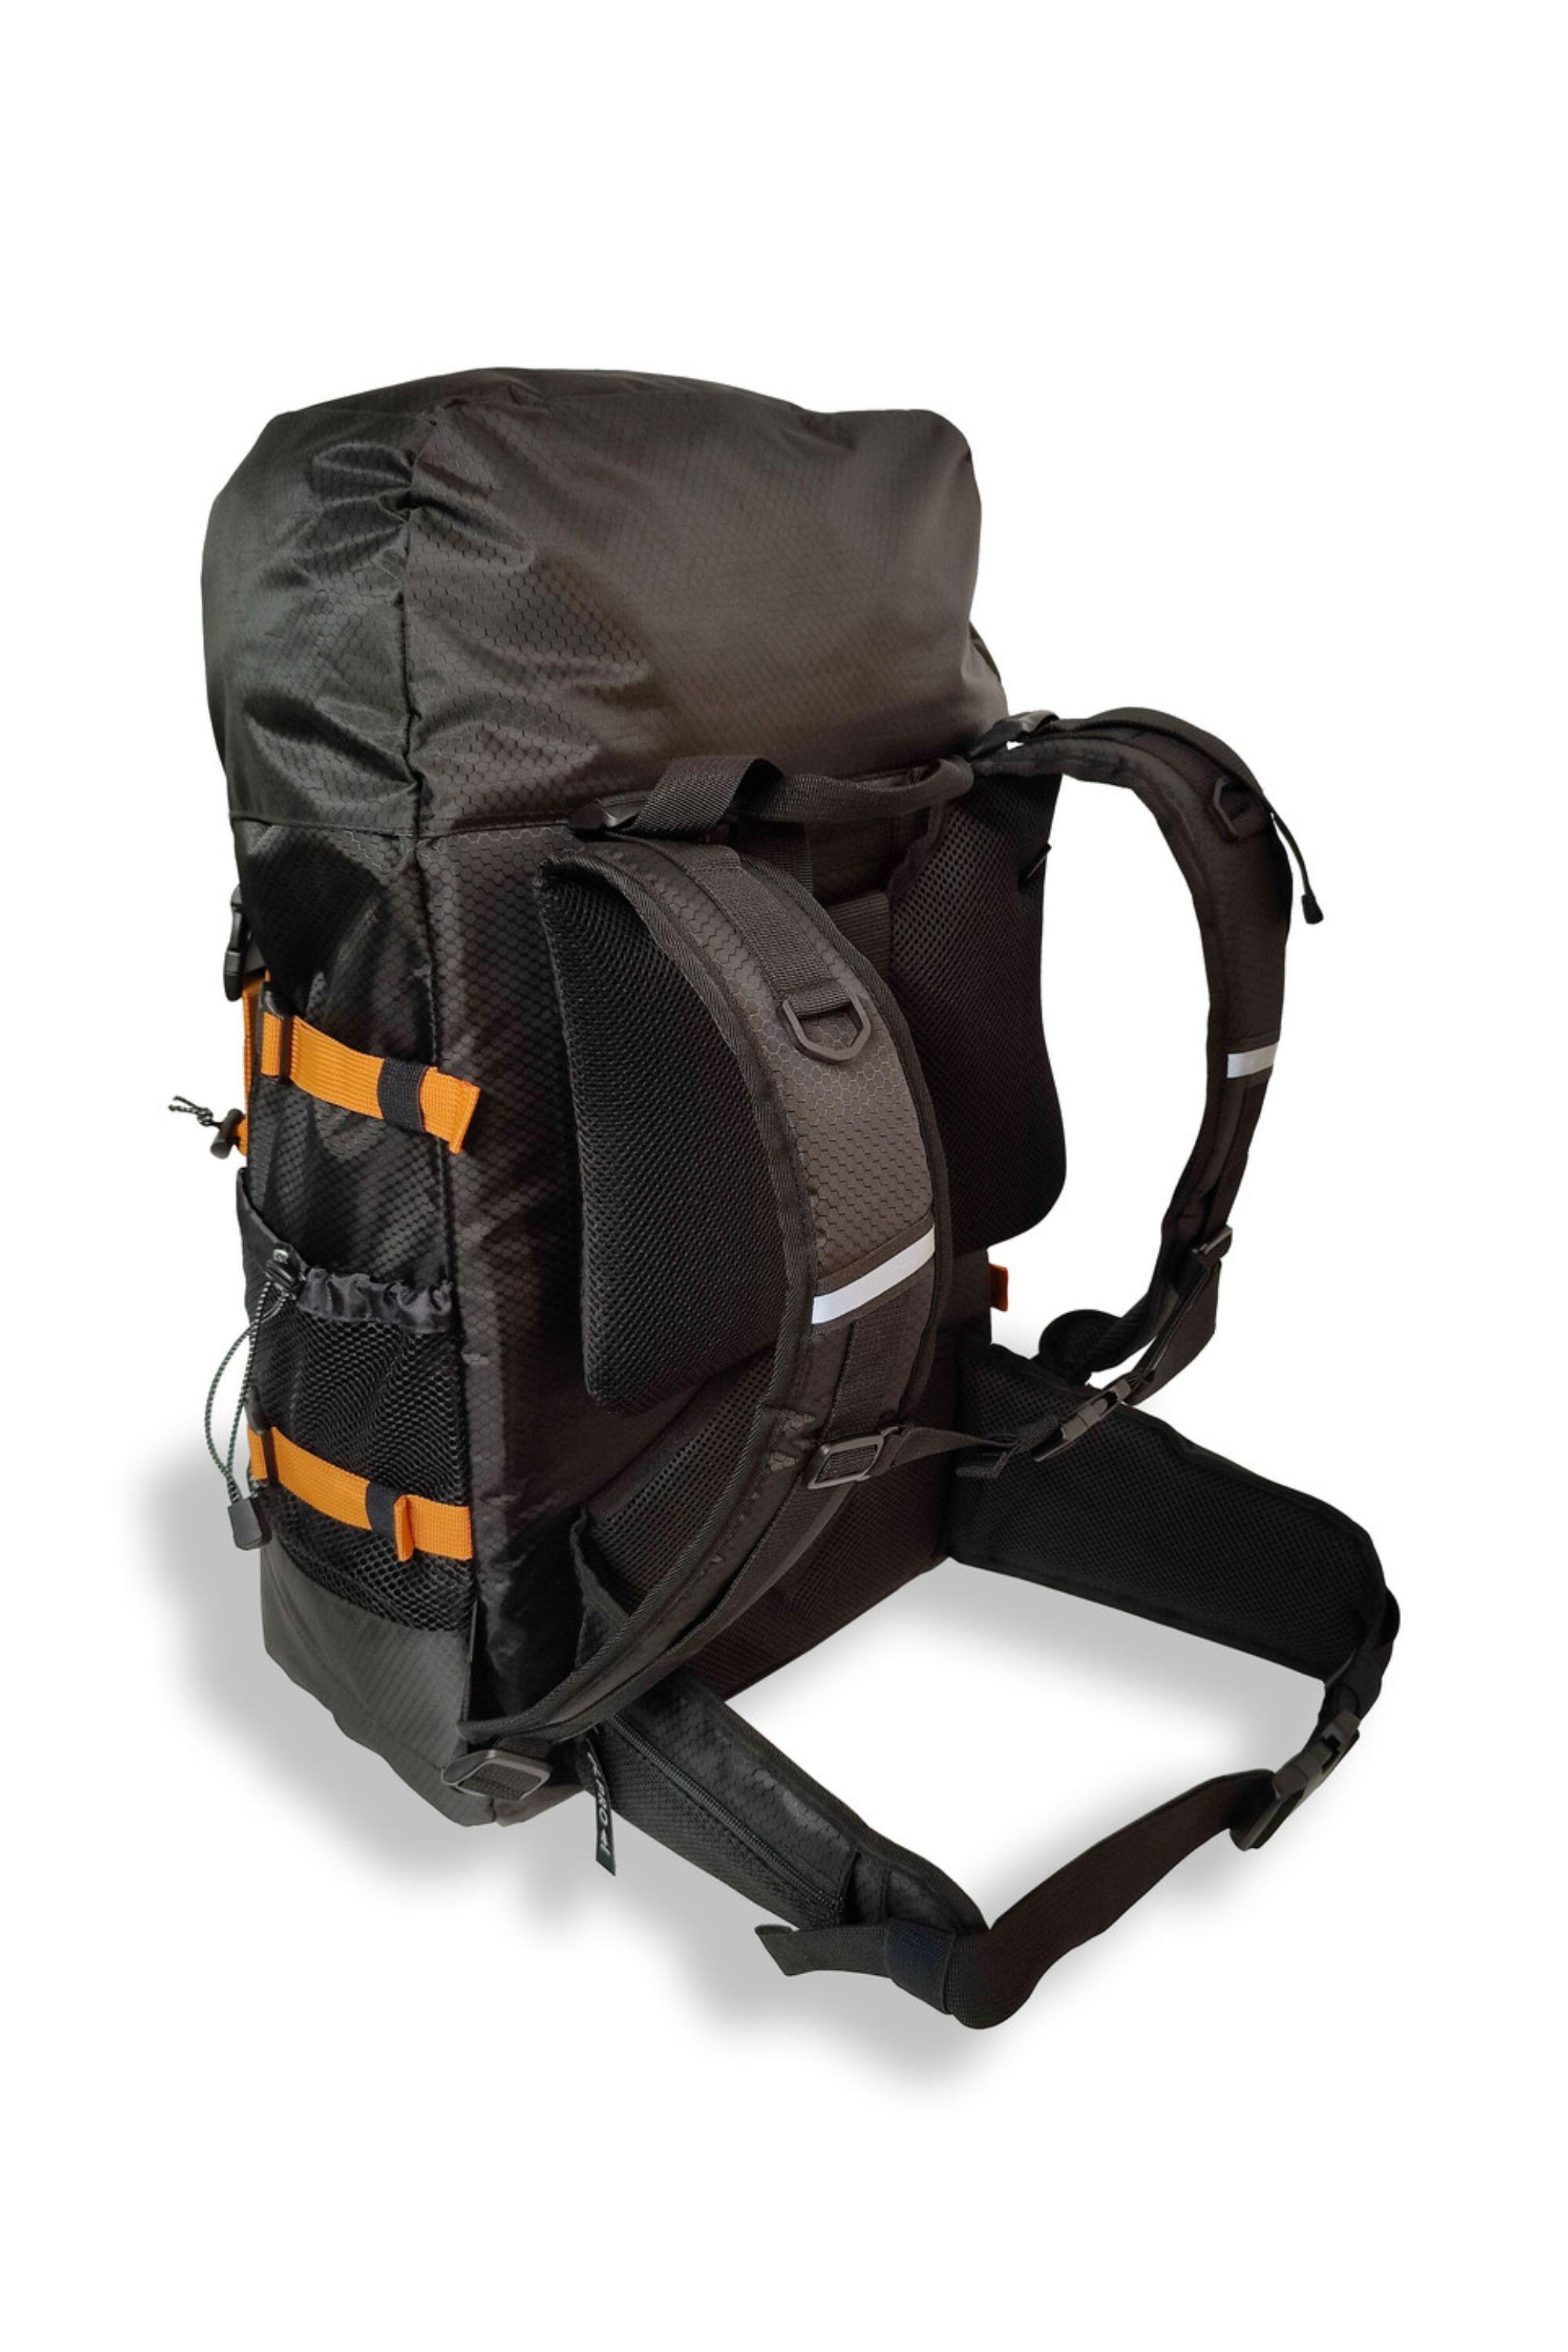 OLPRO 40L Rucksack Bag Black 2/4